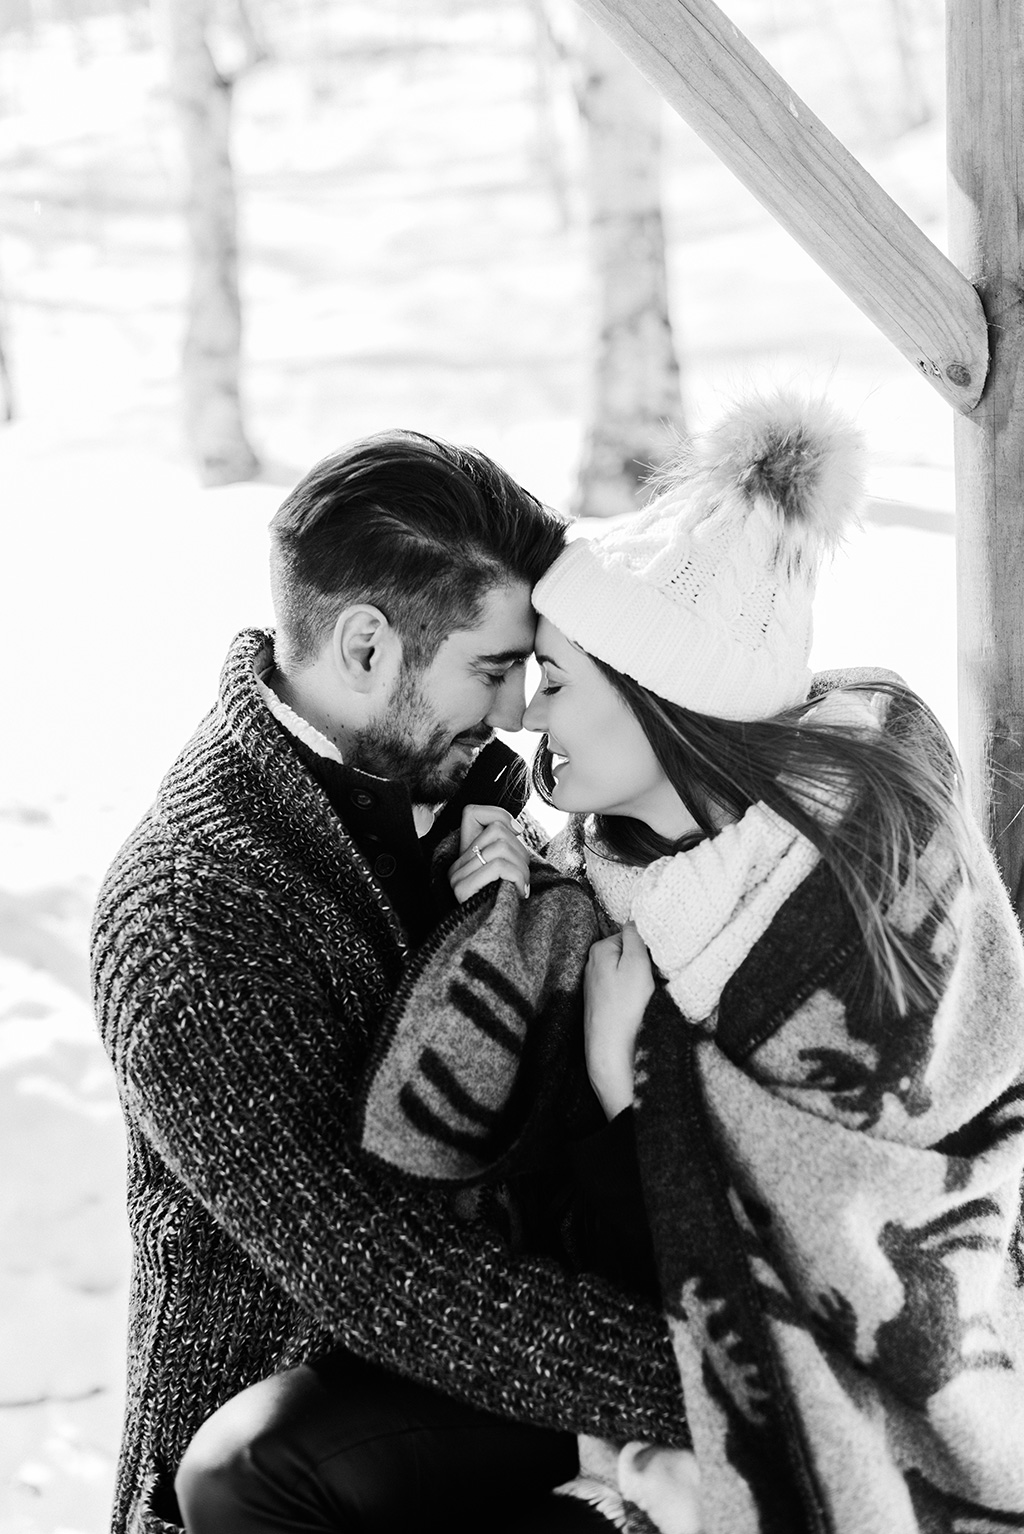 Prewedding φωτογράφιση στα χιόνια, μια υπέροχη εμπειρία για το ζευγάρι, George Kostopoulos Fine Art Wedding Photography